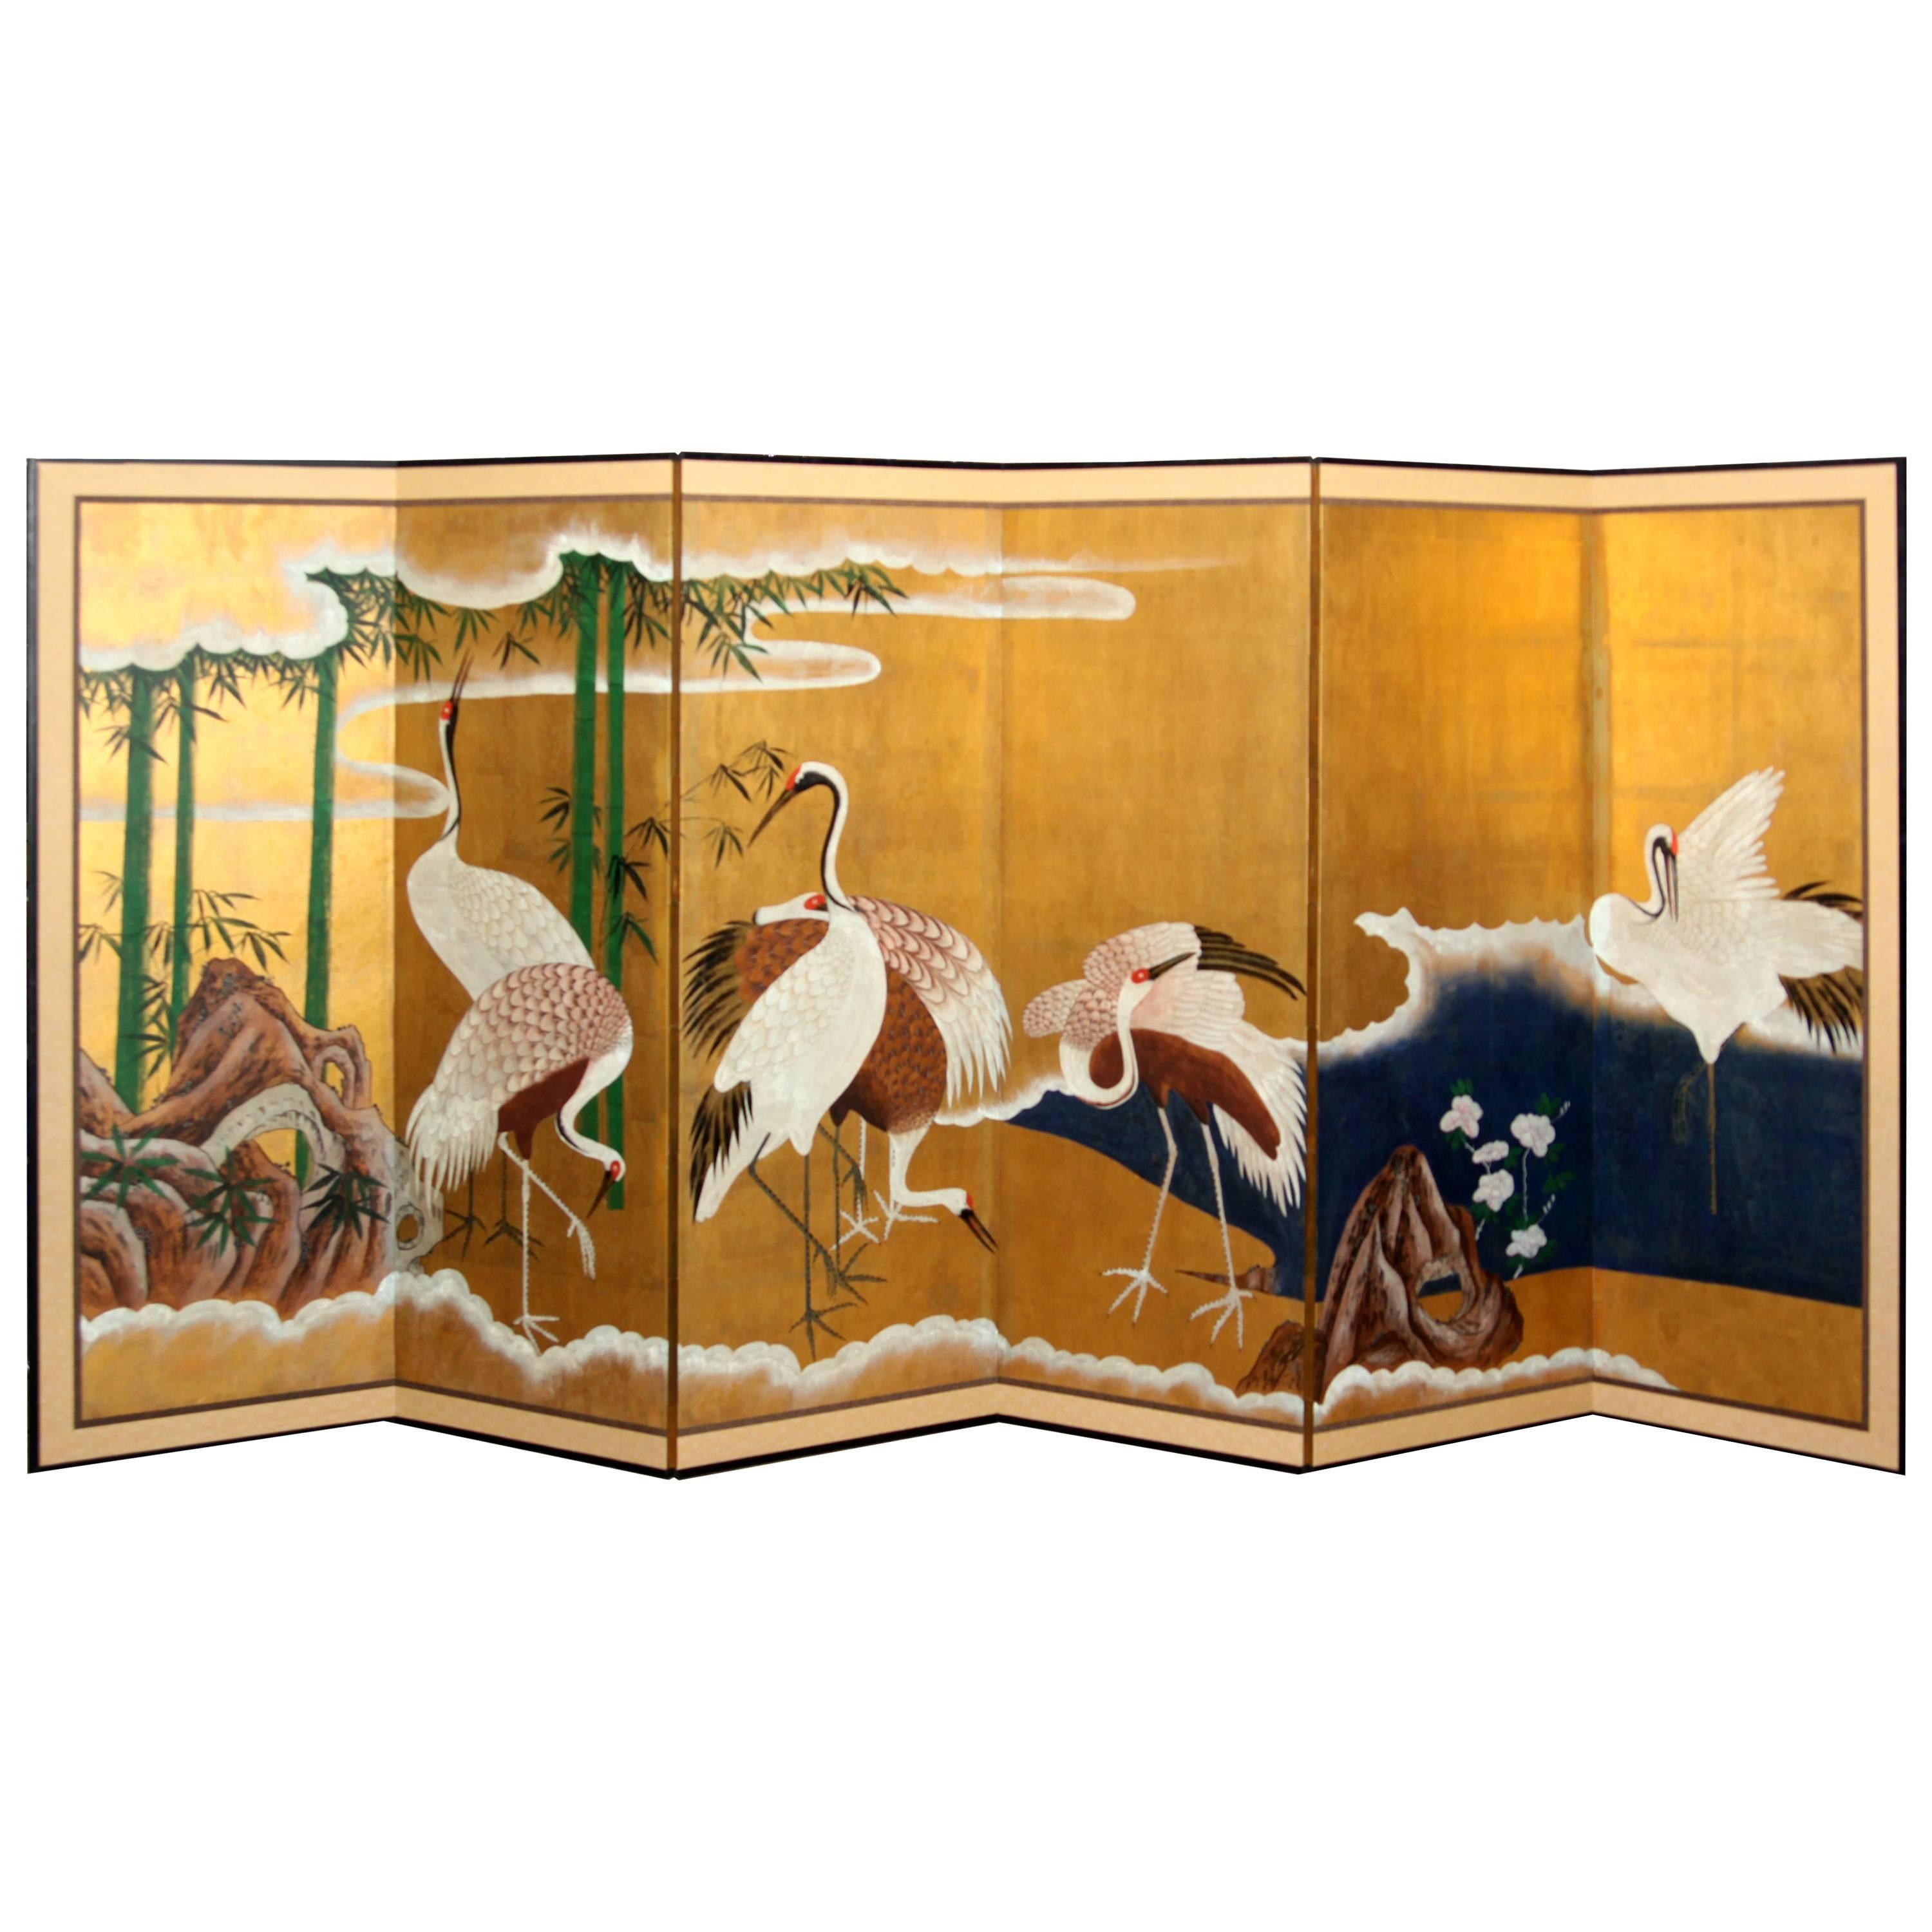 Hand-Painted Japanese Folding Screen Byobu Cranes Painting, Watercolor, Goldleaf